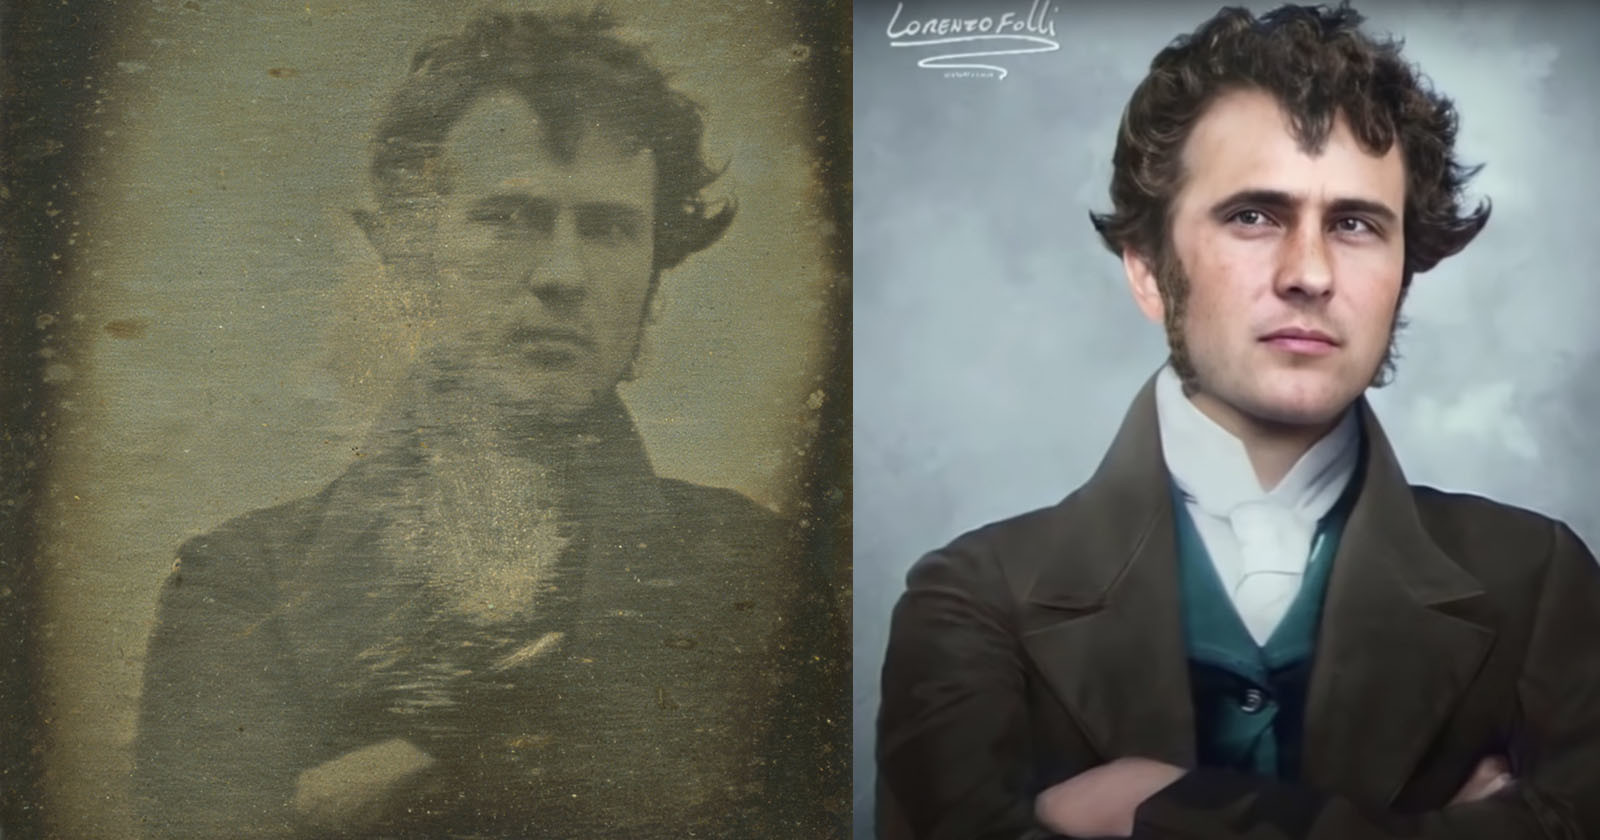  photo restoration brings victorian portraits life 